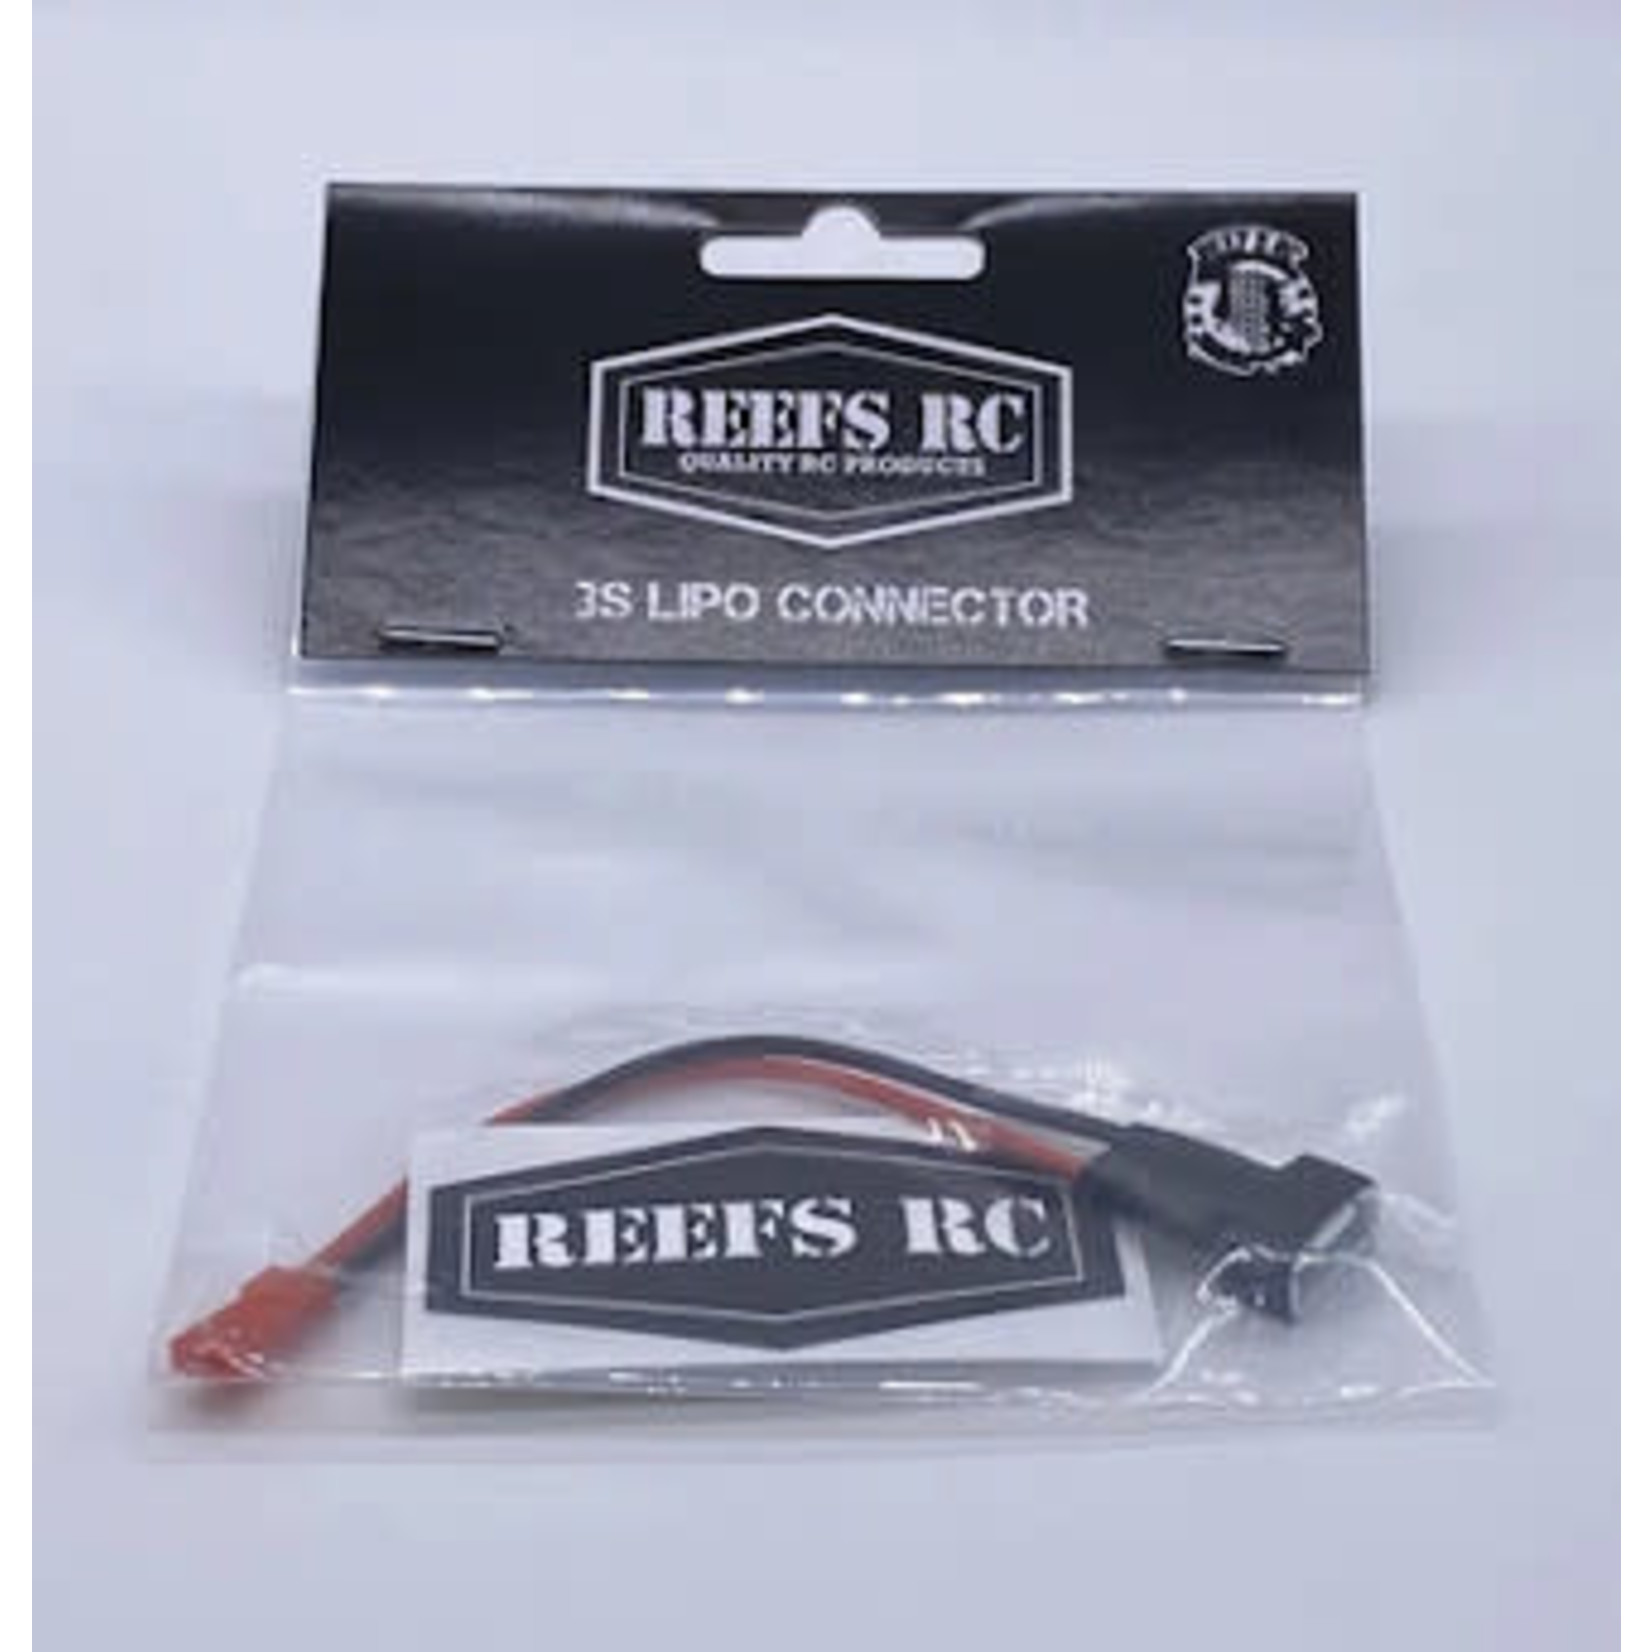 Reefs RC Reefs RC - 3S LiPo Connector #REEFS62